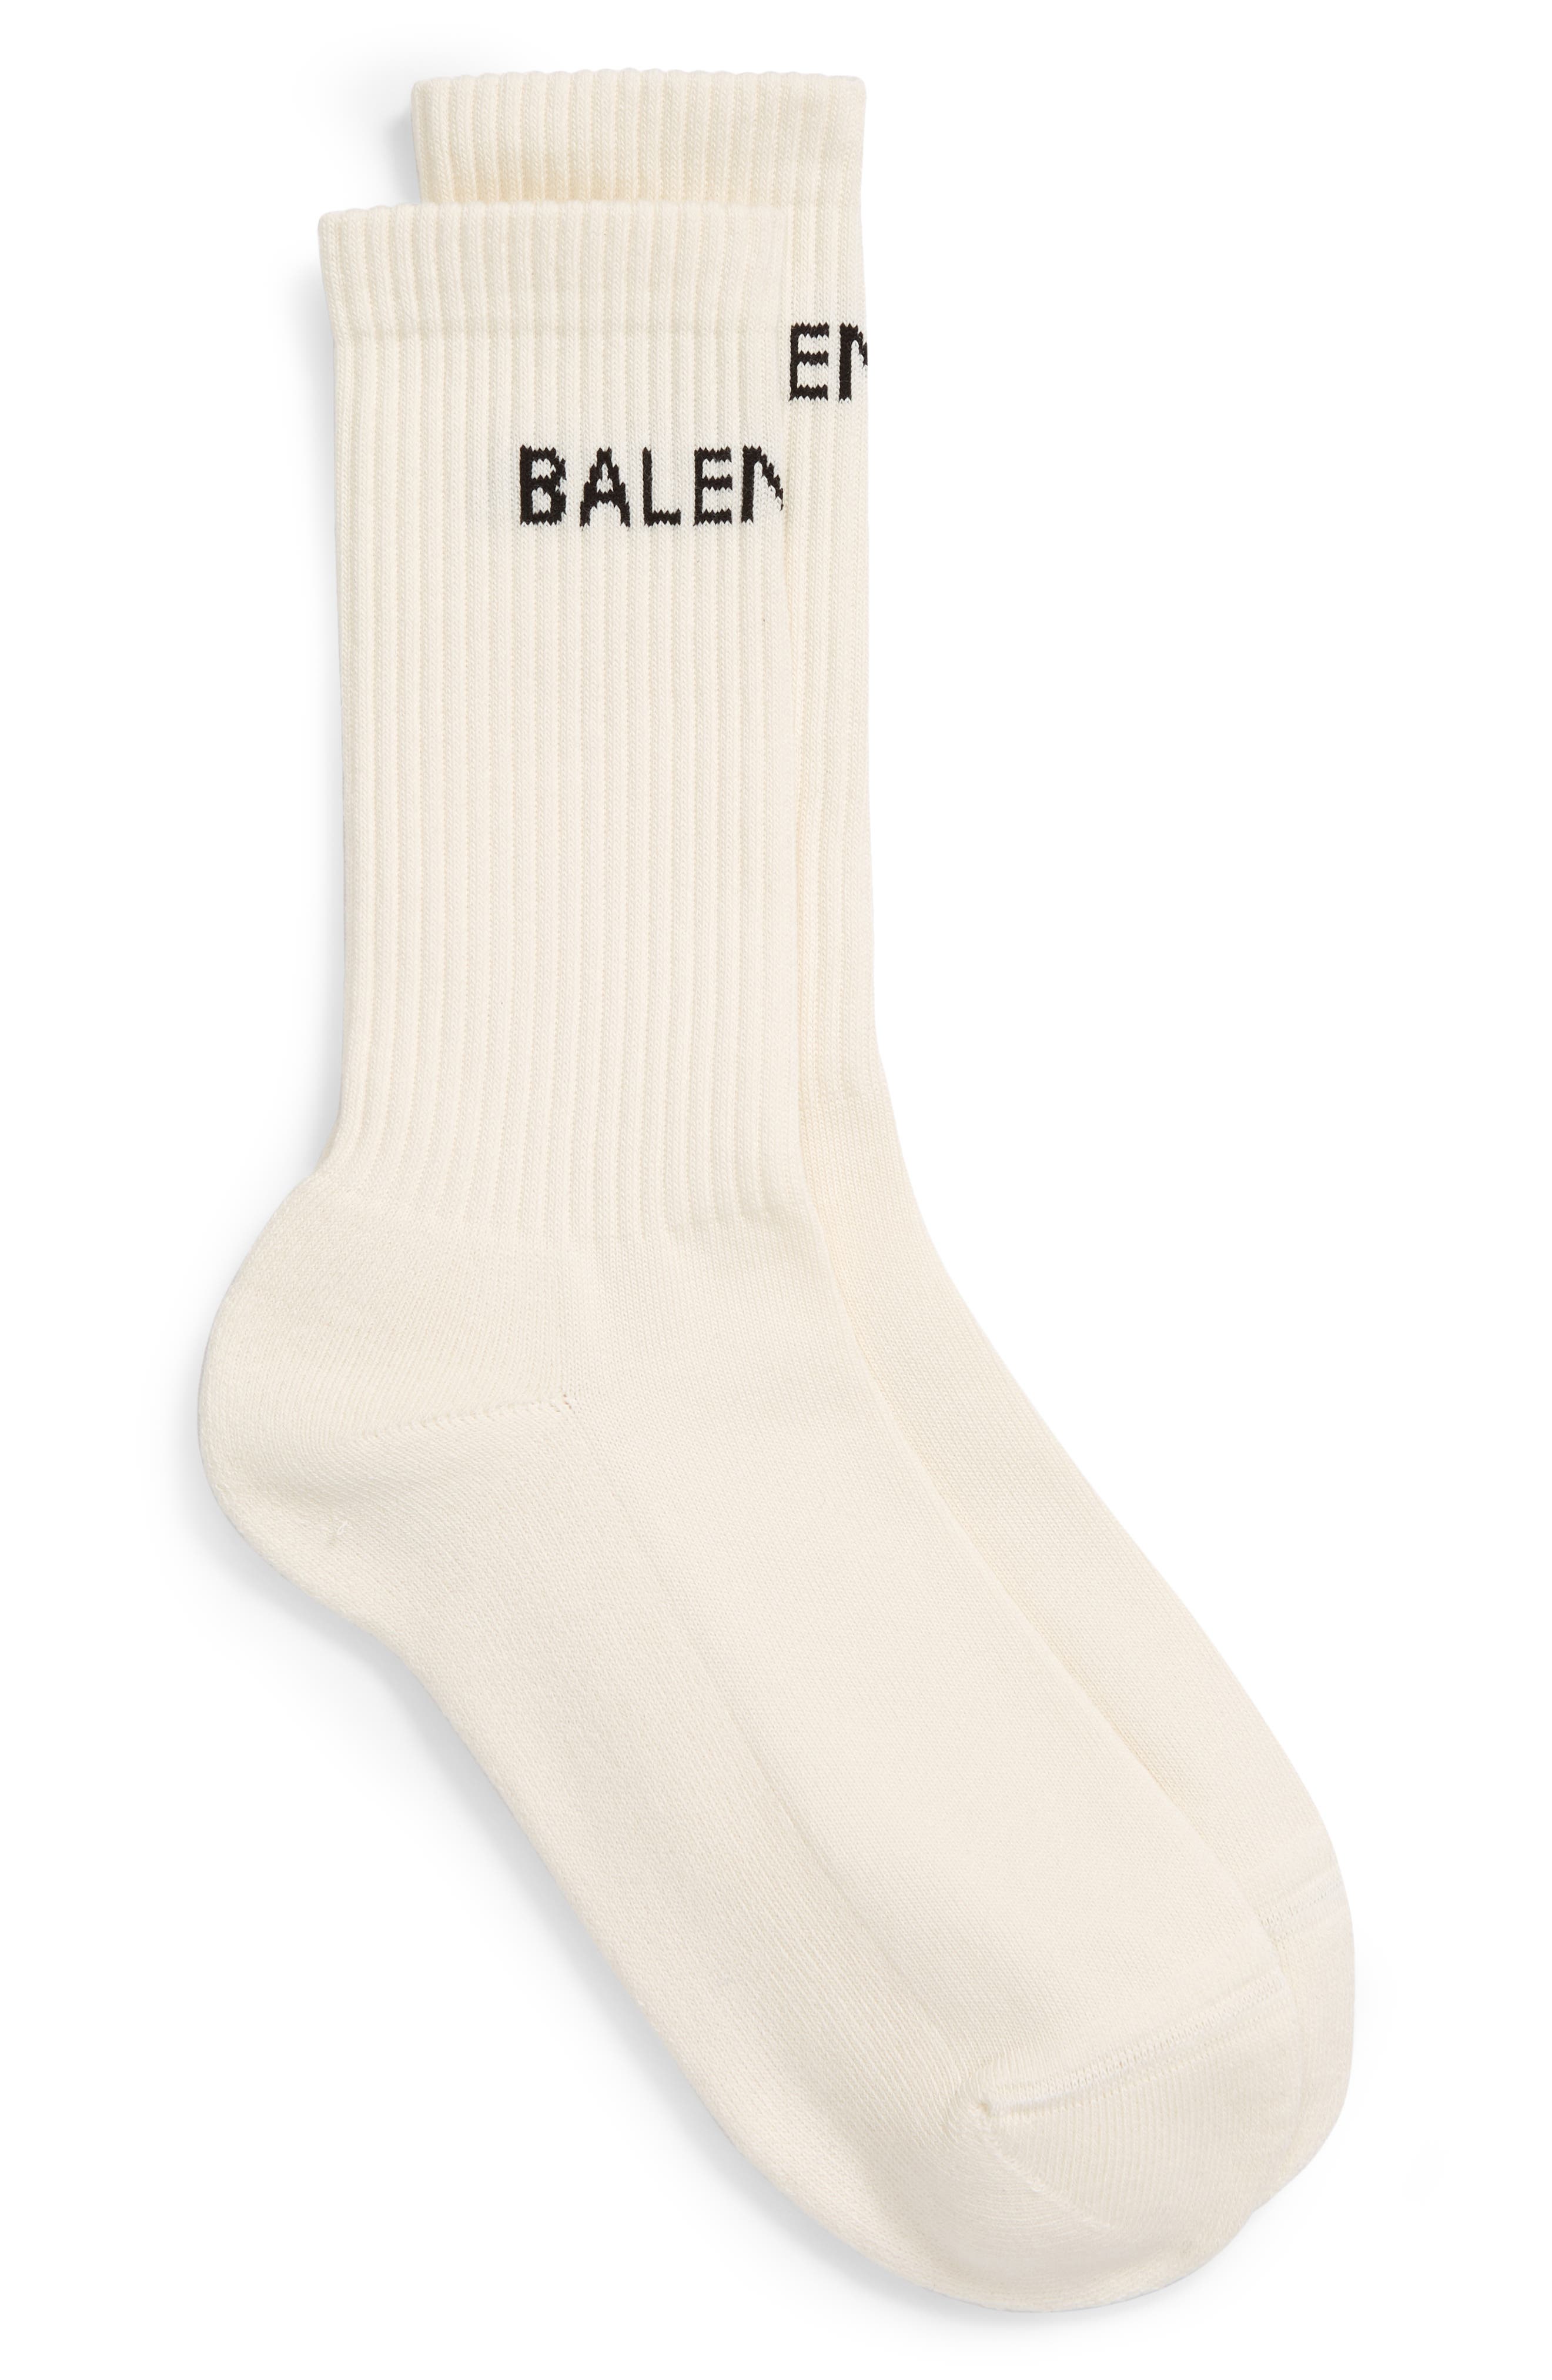 Balenciaga Logo Crew Socks in White/Black at Nordstrom, Size X-Large Us